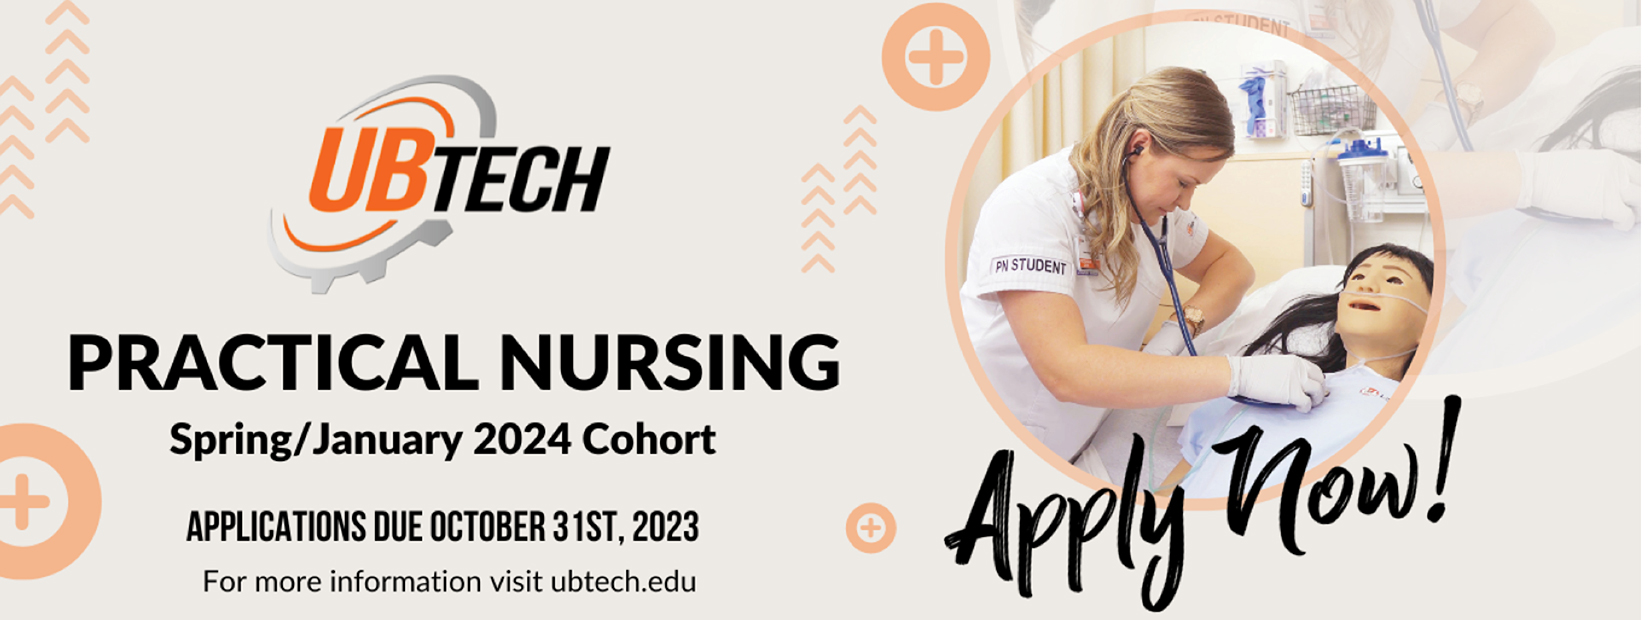 Practical Nursing Spring/January 2024 Cohort applications due October 31st 2023.